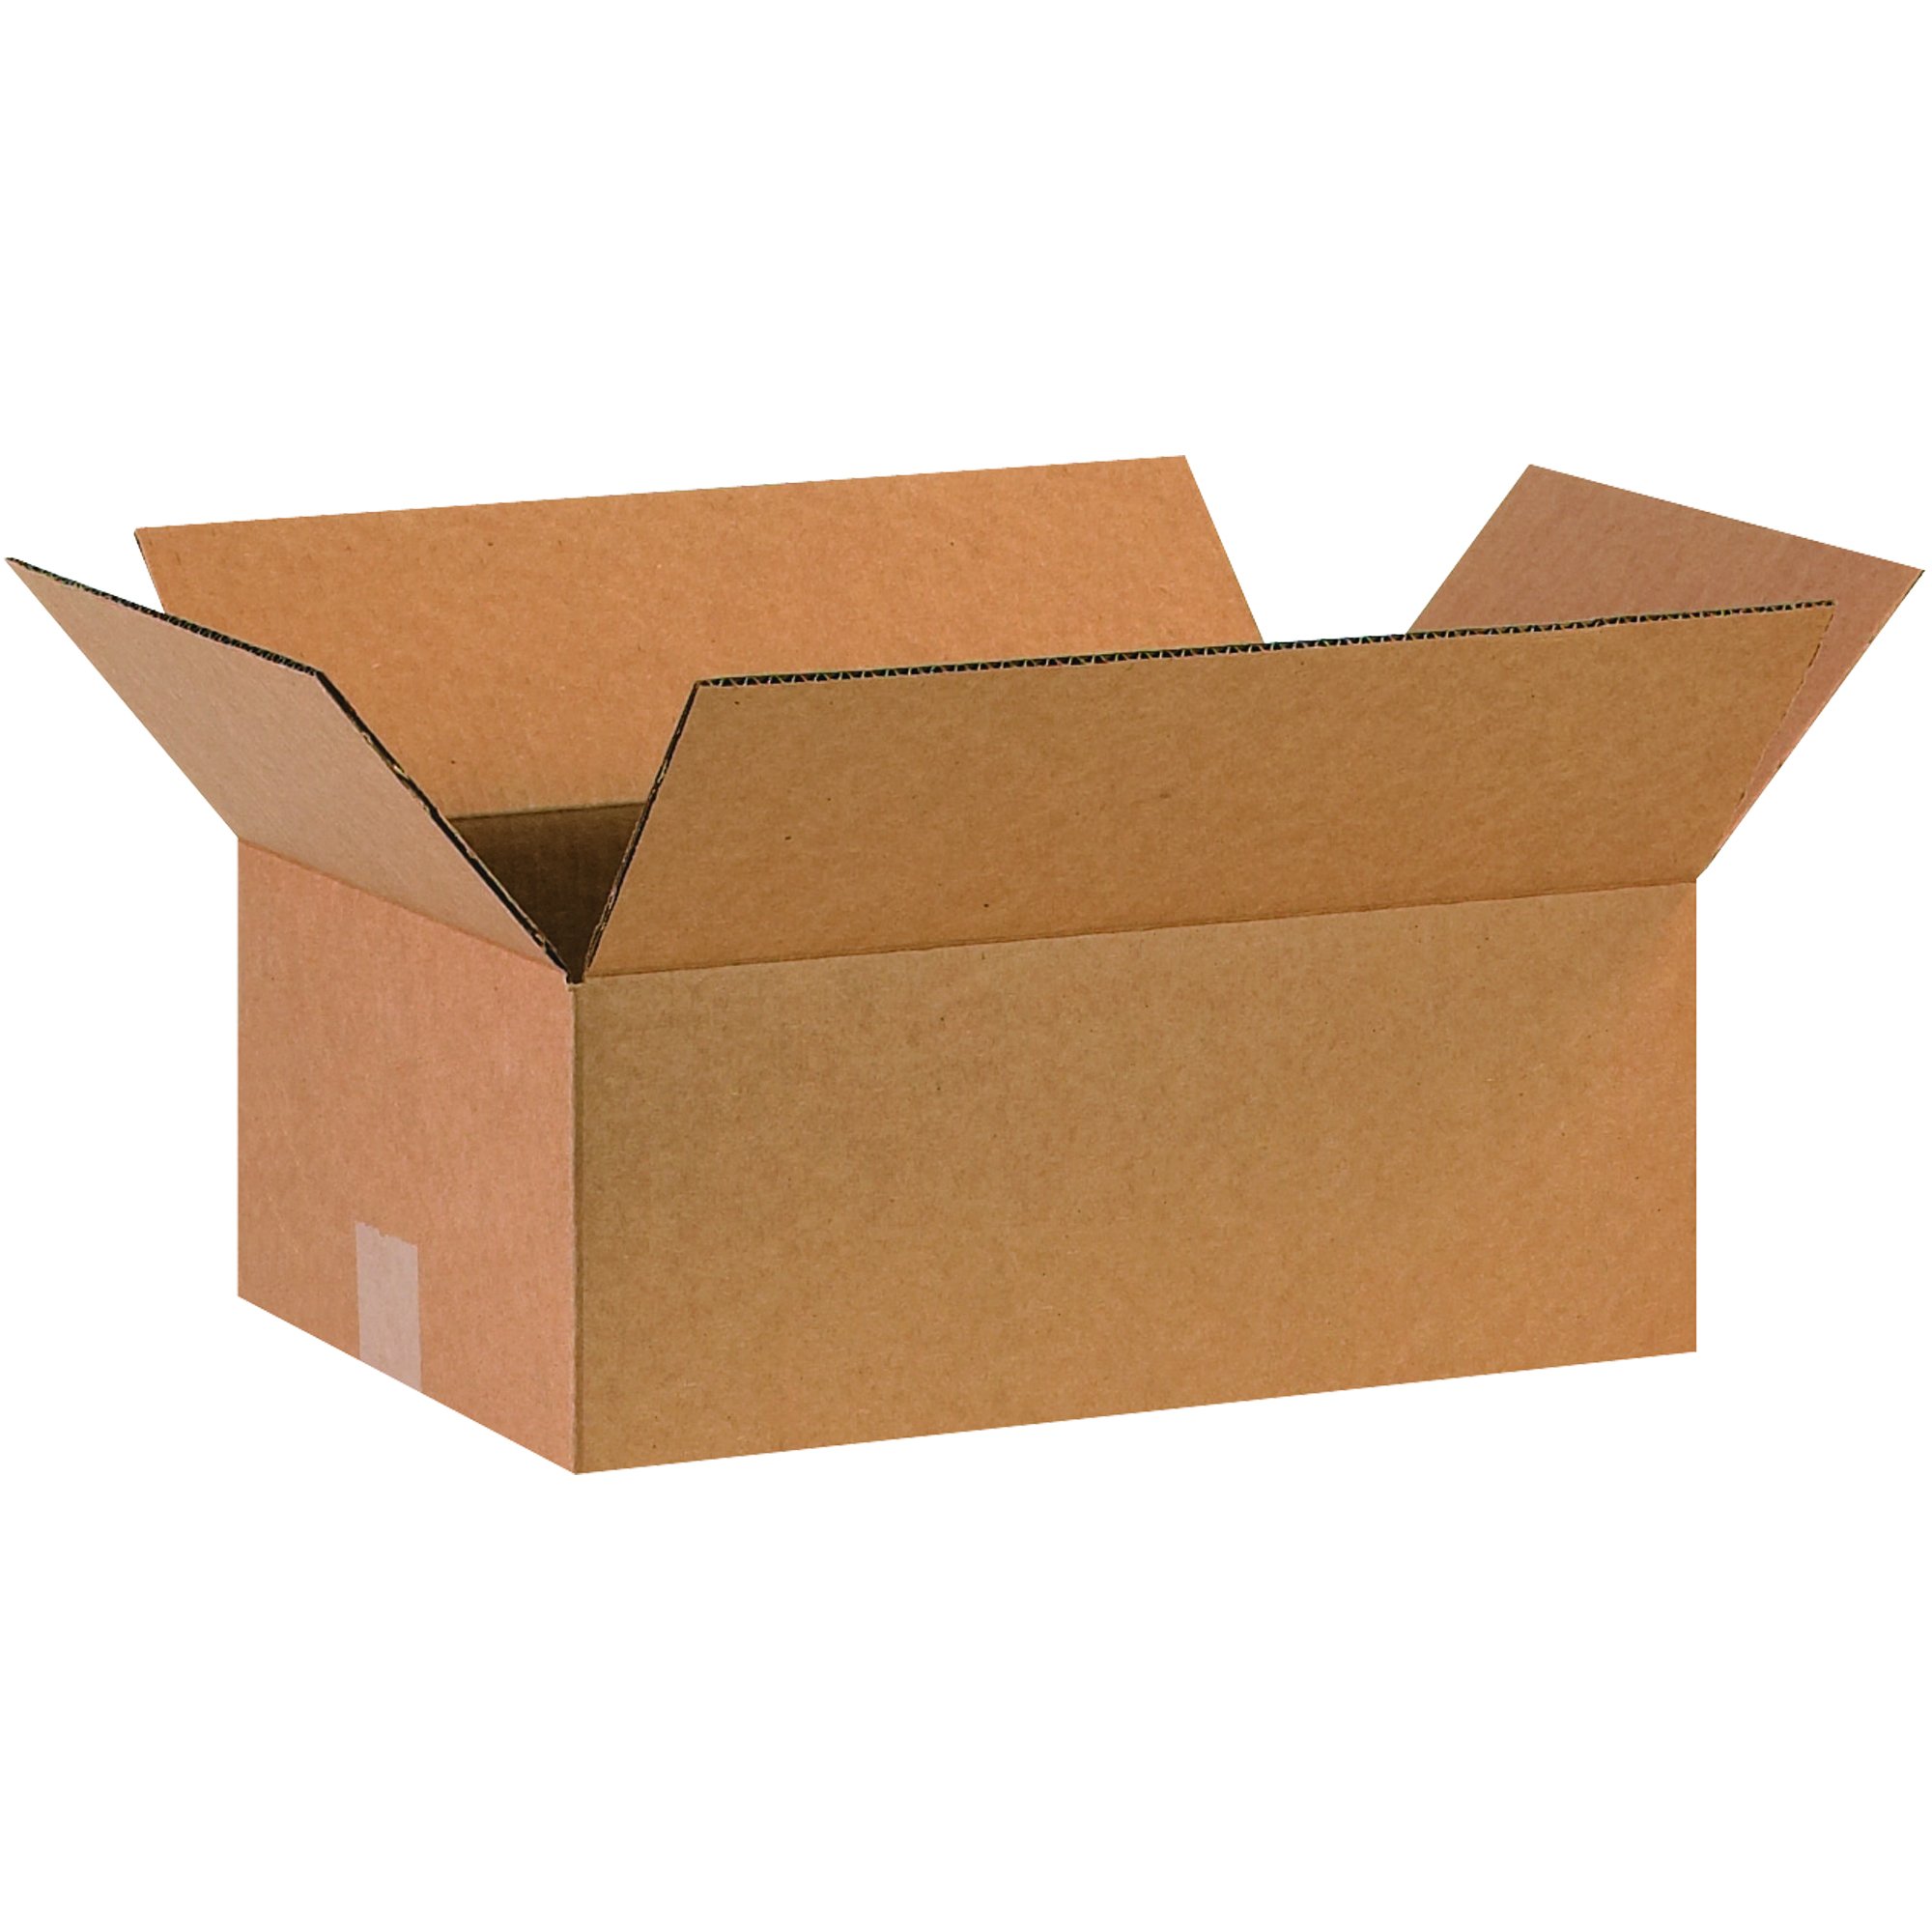 BOX USA B16106 Corrugated Boxes, 16"L x 10"W x 6"H, Kraft (Pack of 25)